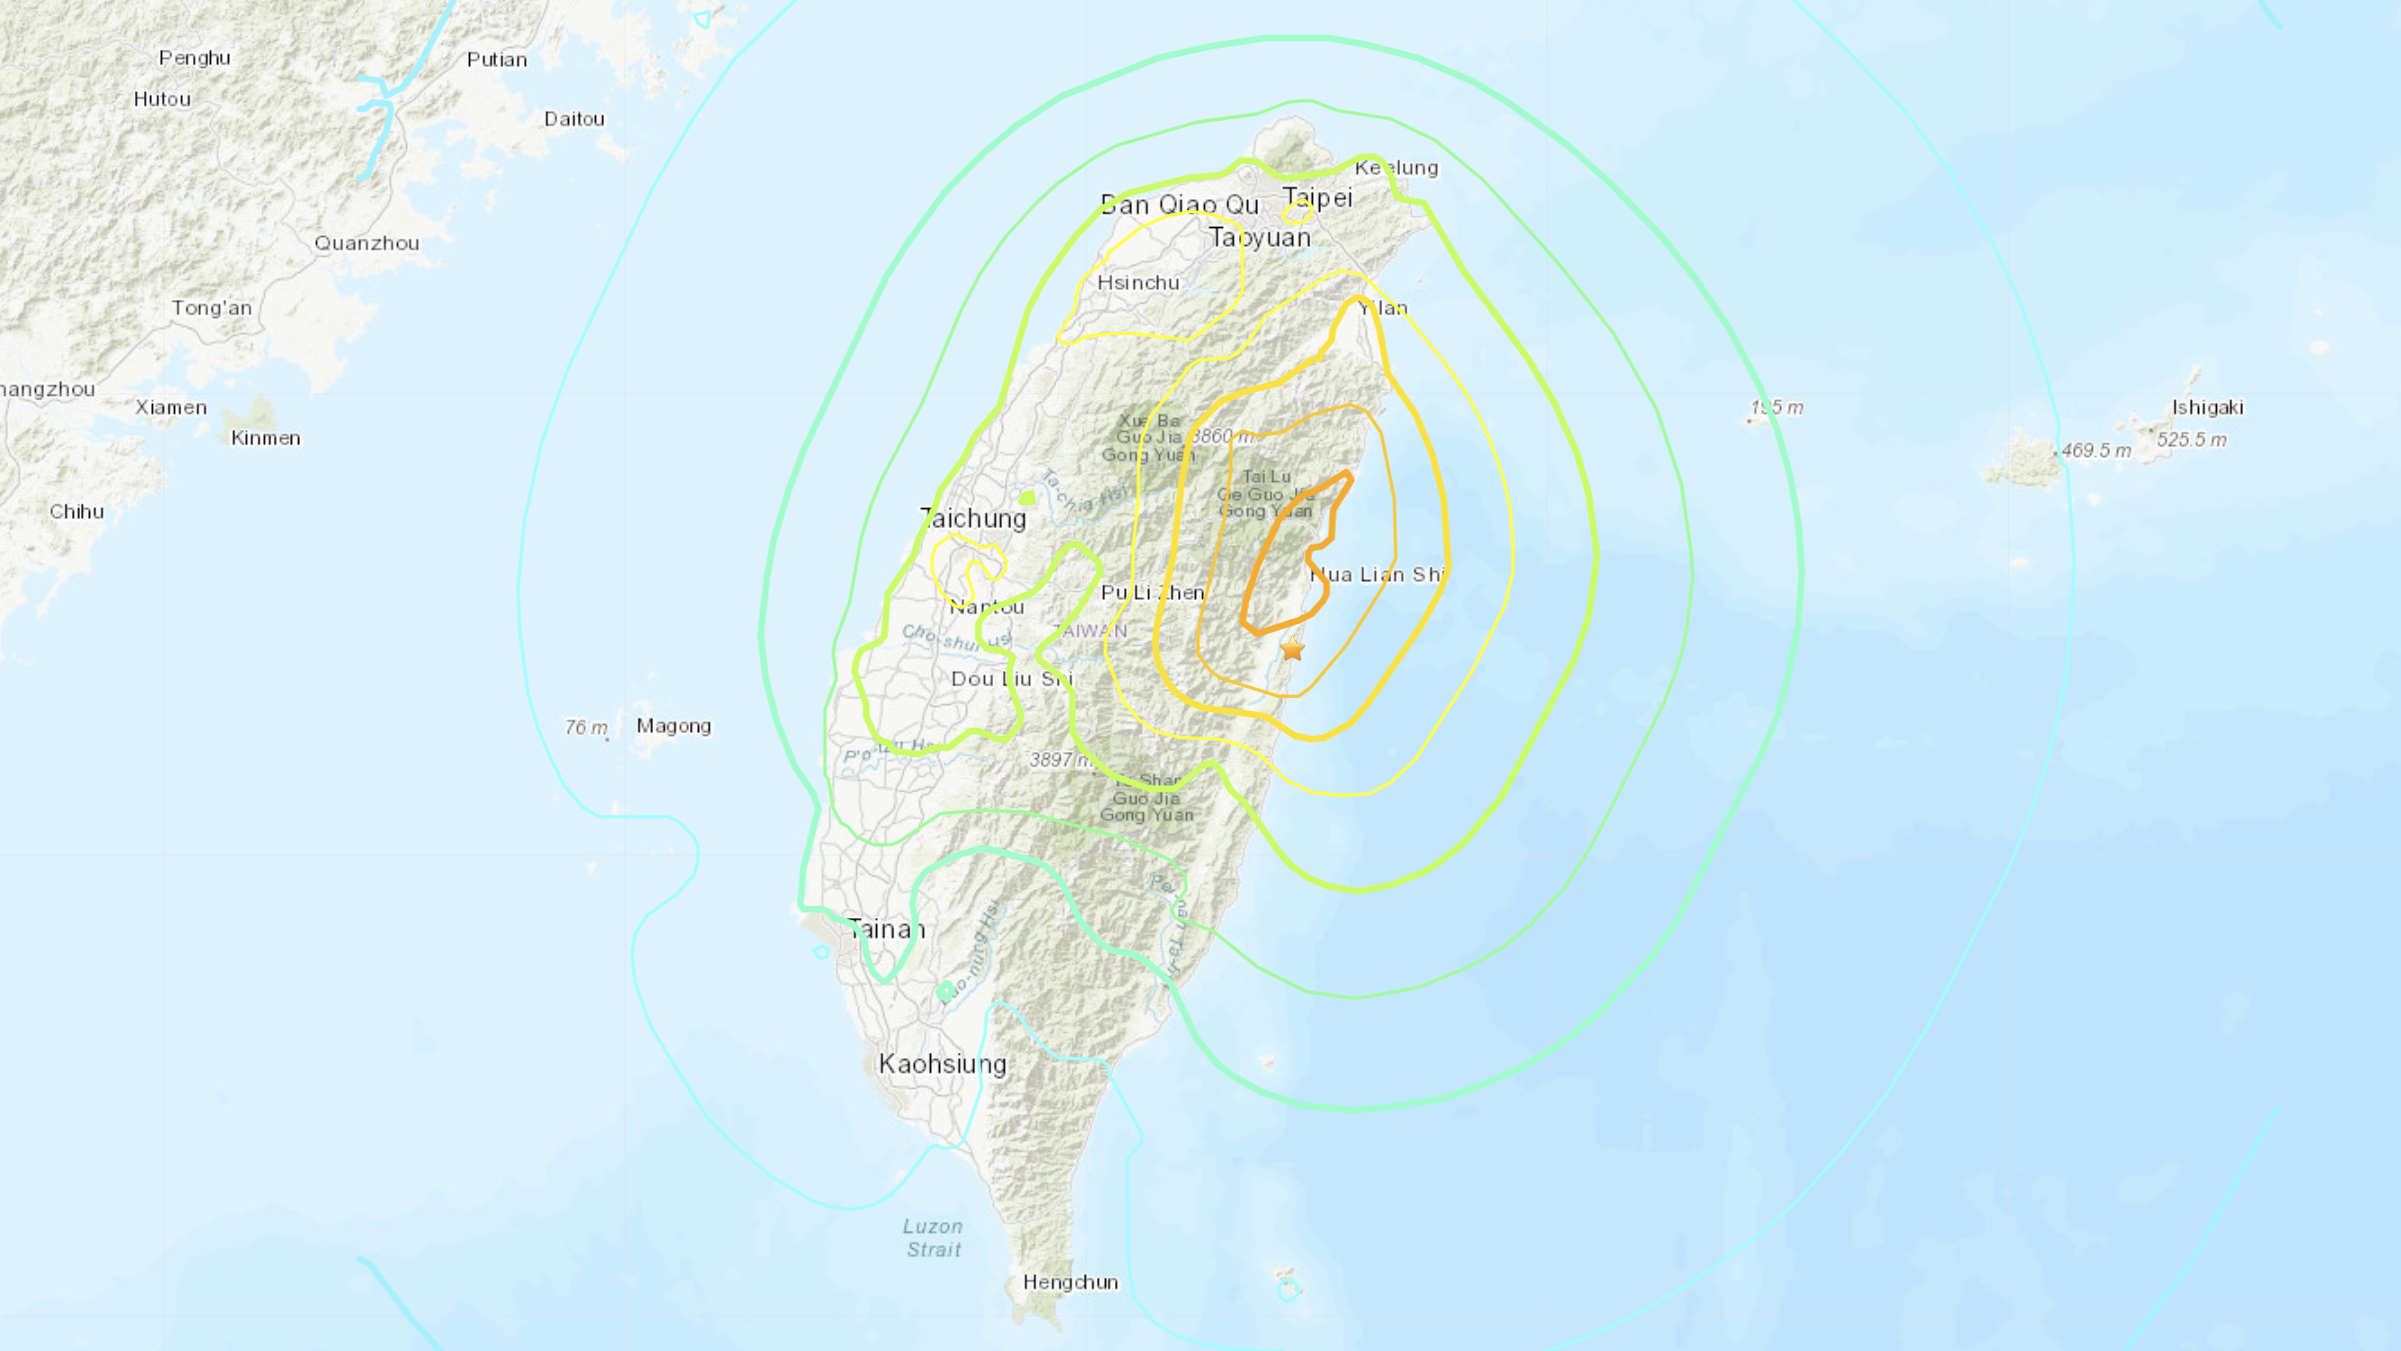 Taiwan hit with 7.4 earthquake, endangering tech supply chain